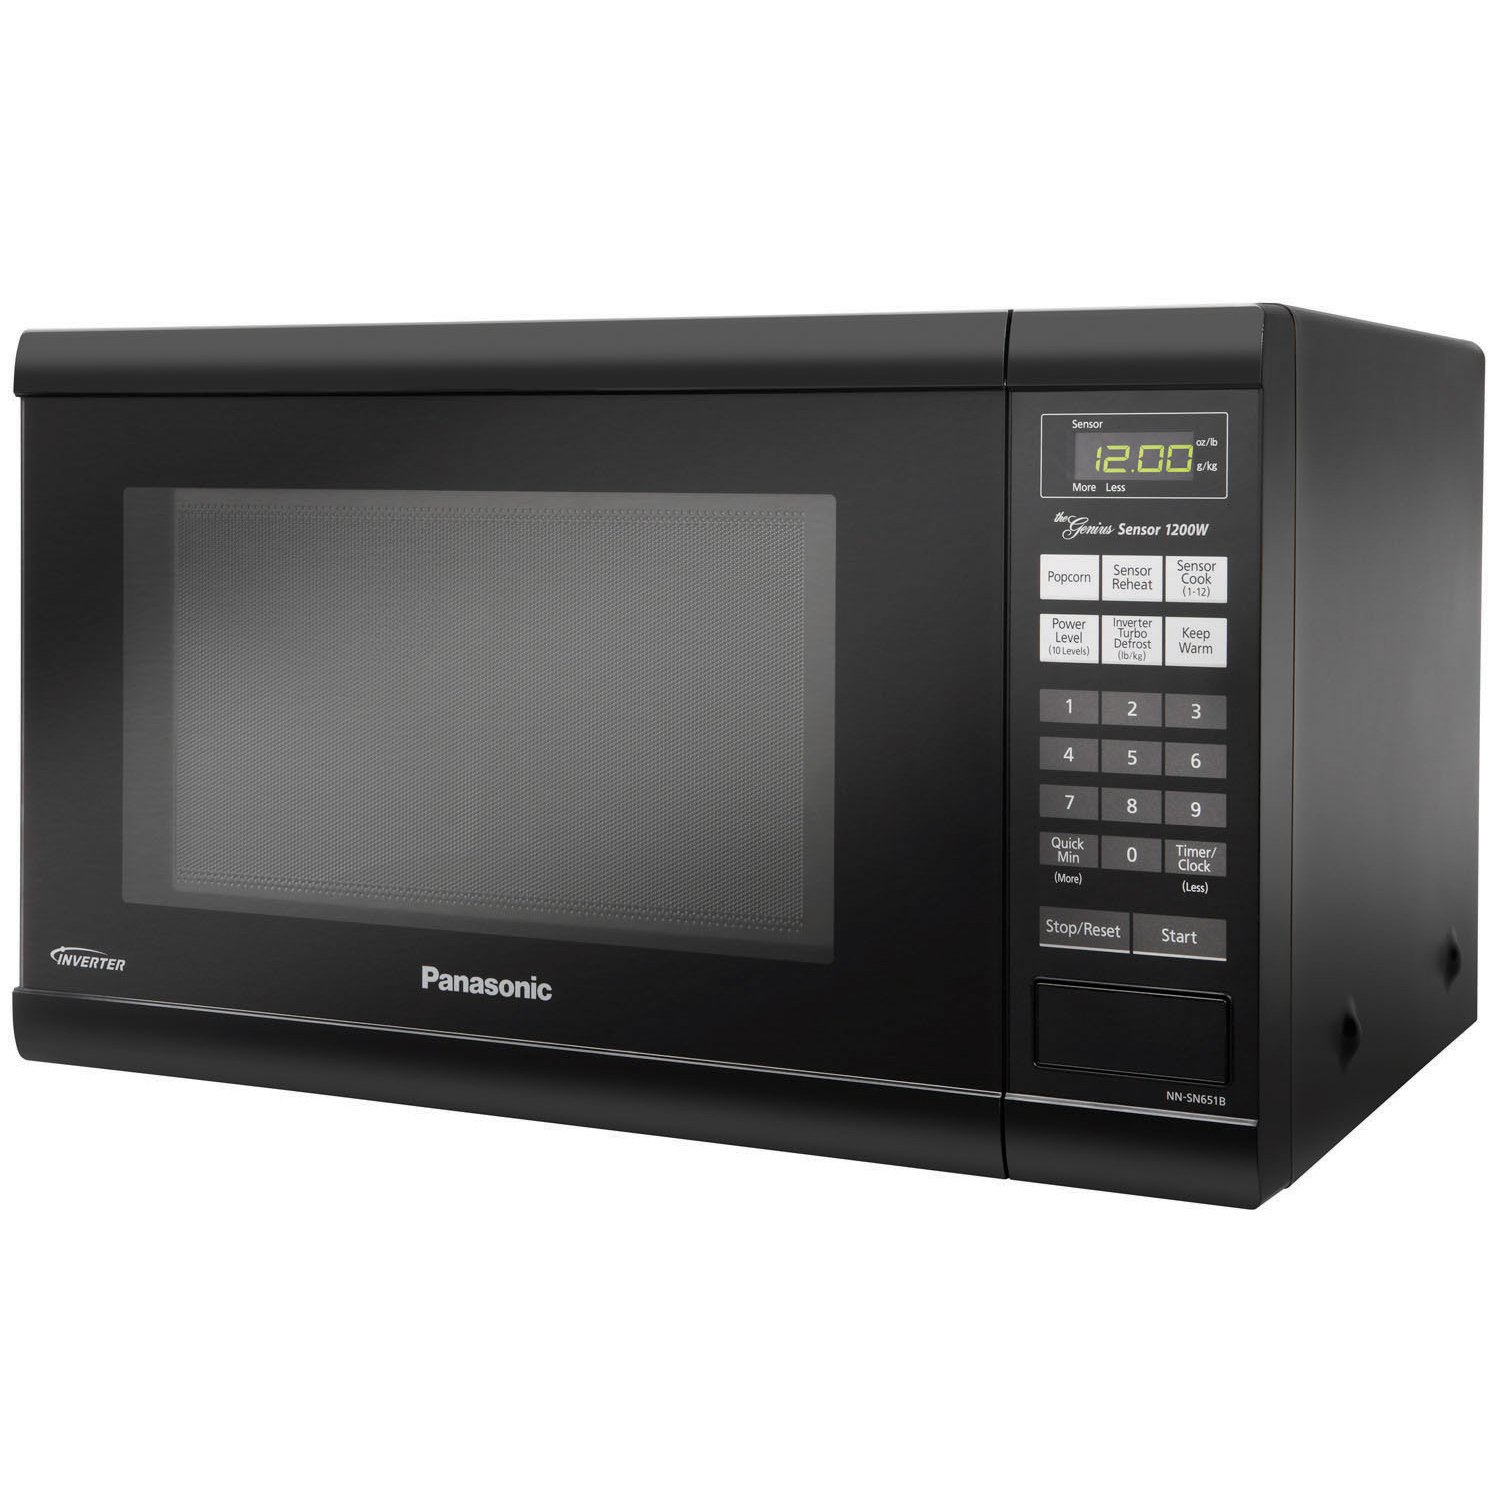 Panasonic Inverter Technology Countertop Microwave Oven NN-SN651B, Black